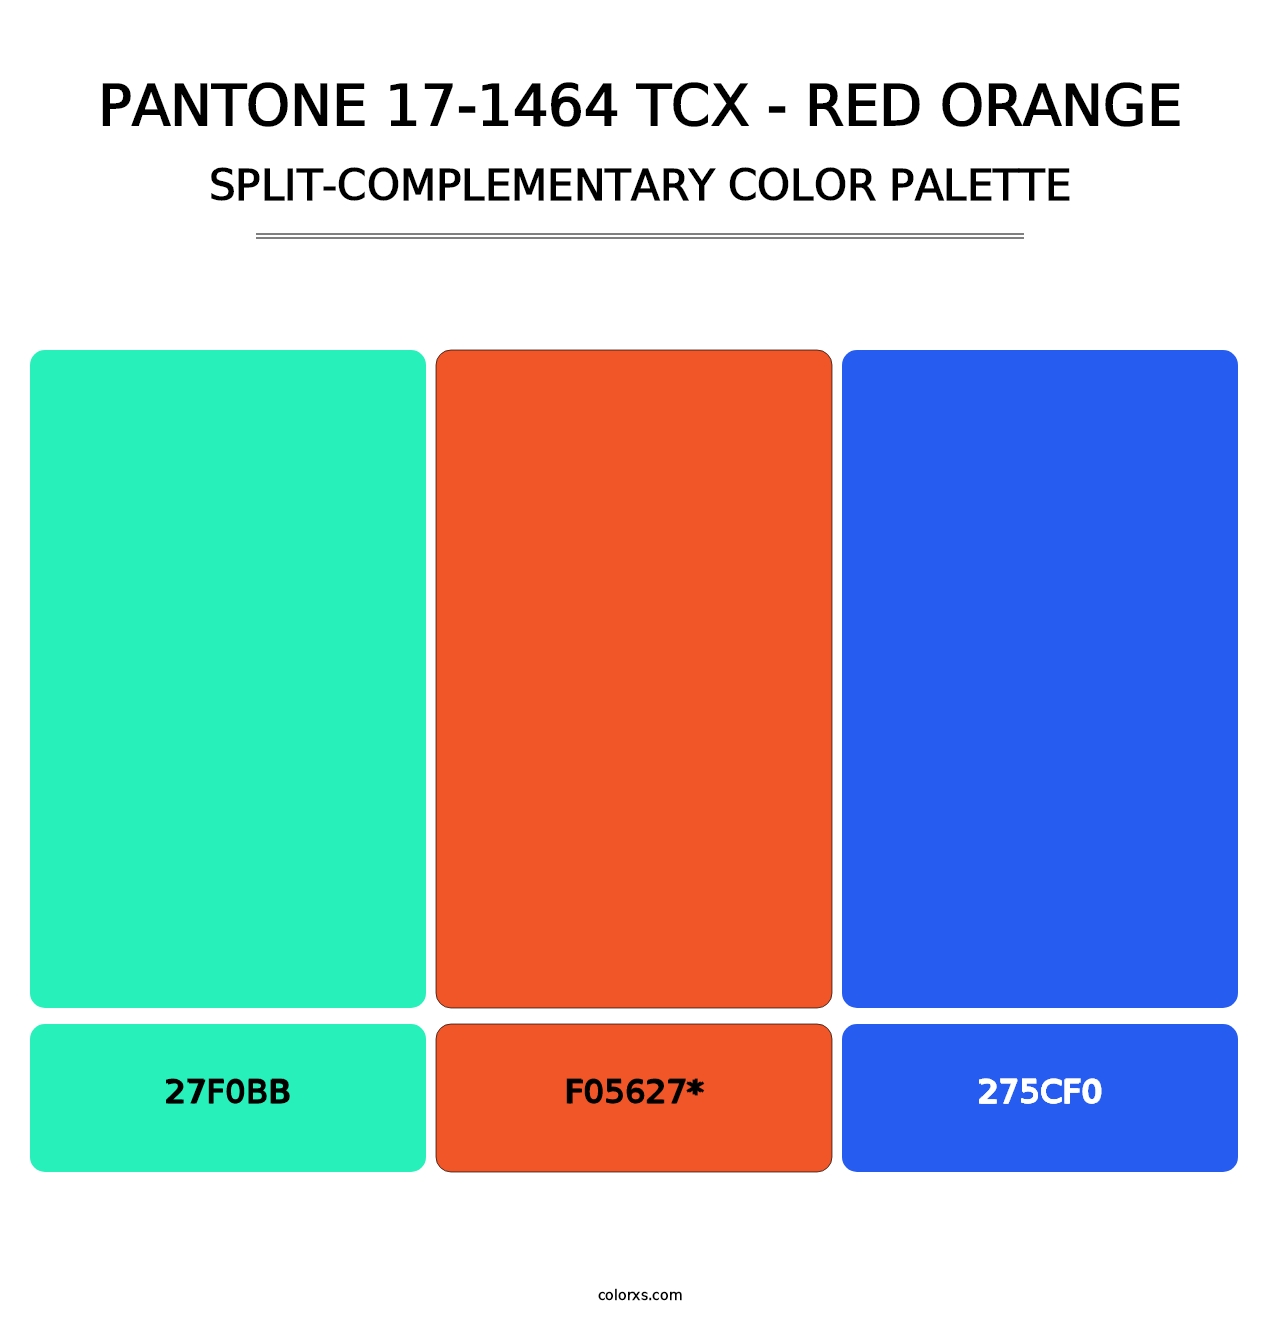 PANTONE 17-1464 TCX - Red Orange - Split-Complementary Color Palette